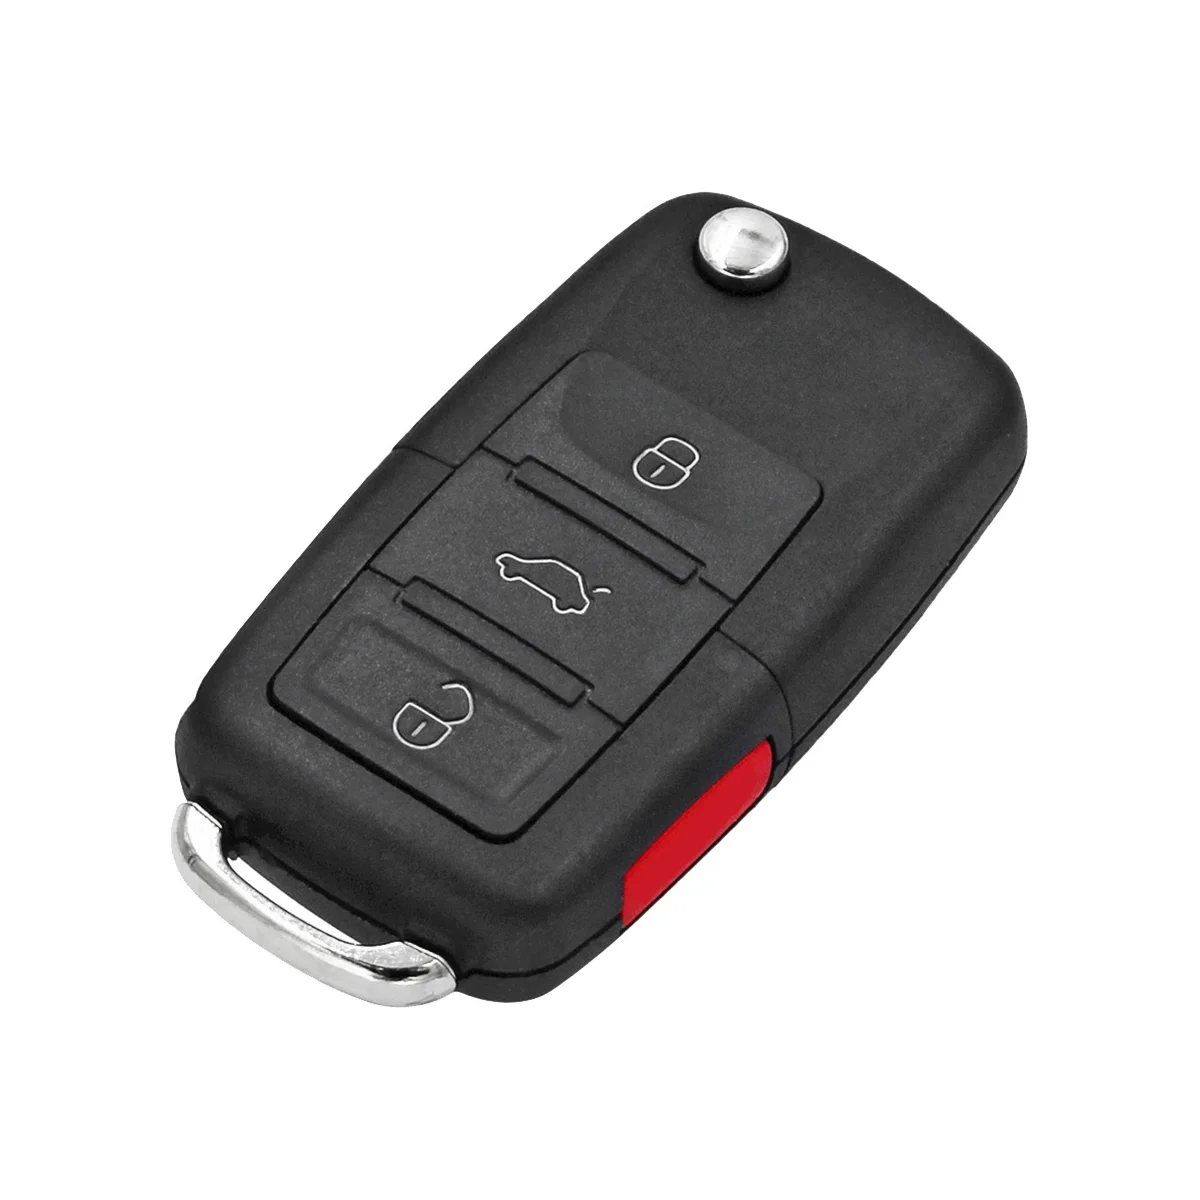 

KEYDIY B01-3+1 KD Remote Control Car Key Universal 4 Button for VW Style for KD900/KD-X2 KD MINI/ URG200 Programmer